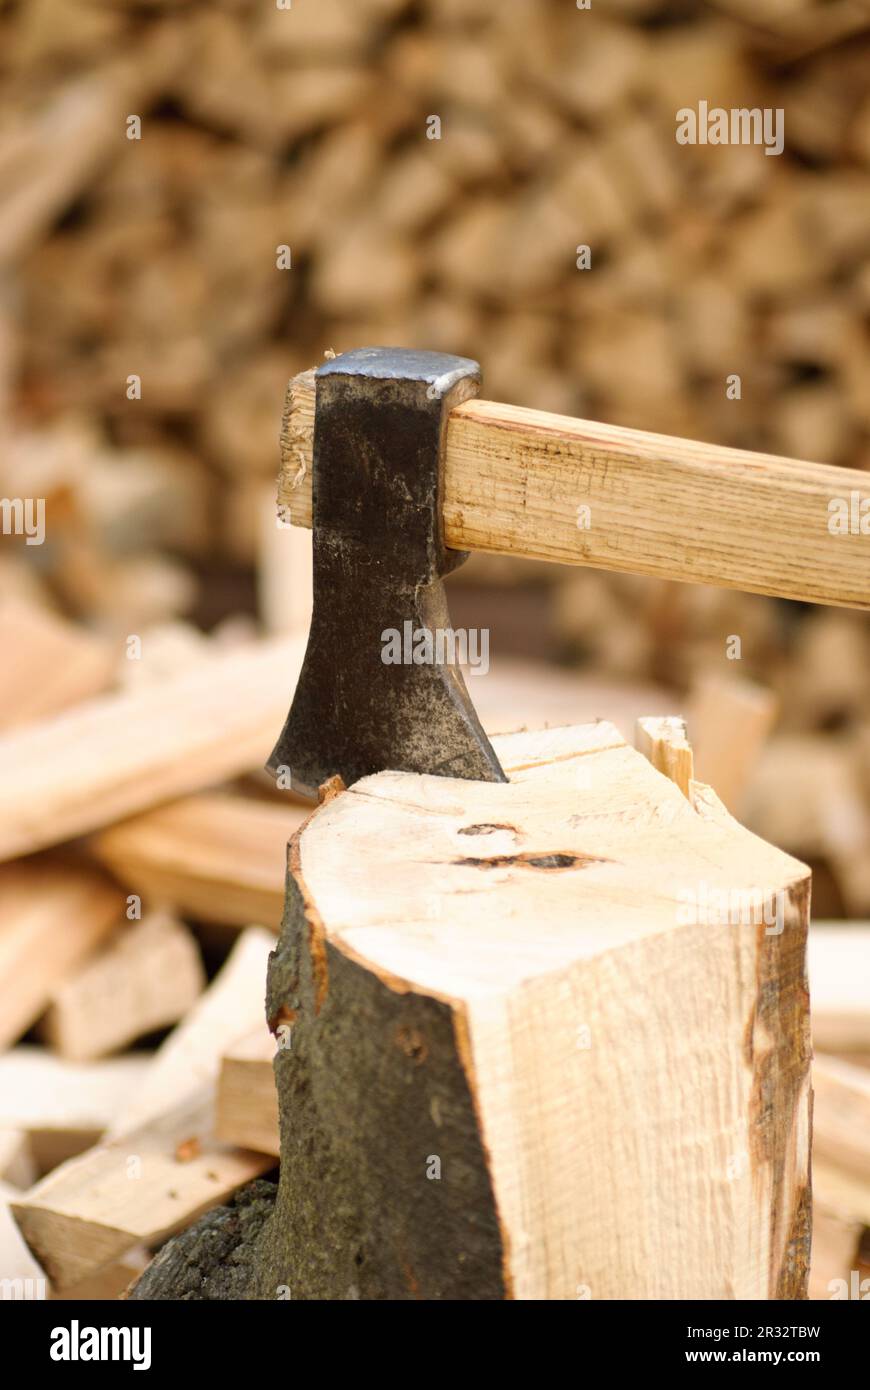 https://c8.alamy.com/comp/2R32TBW/firewood-with-axe-2R32TBW.jpg